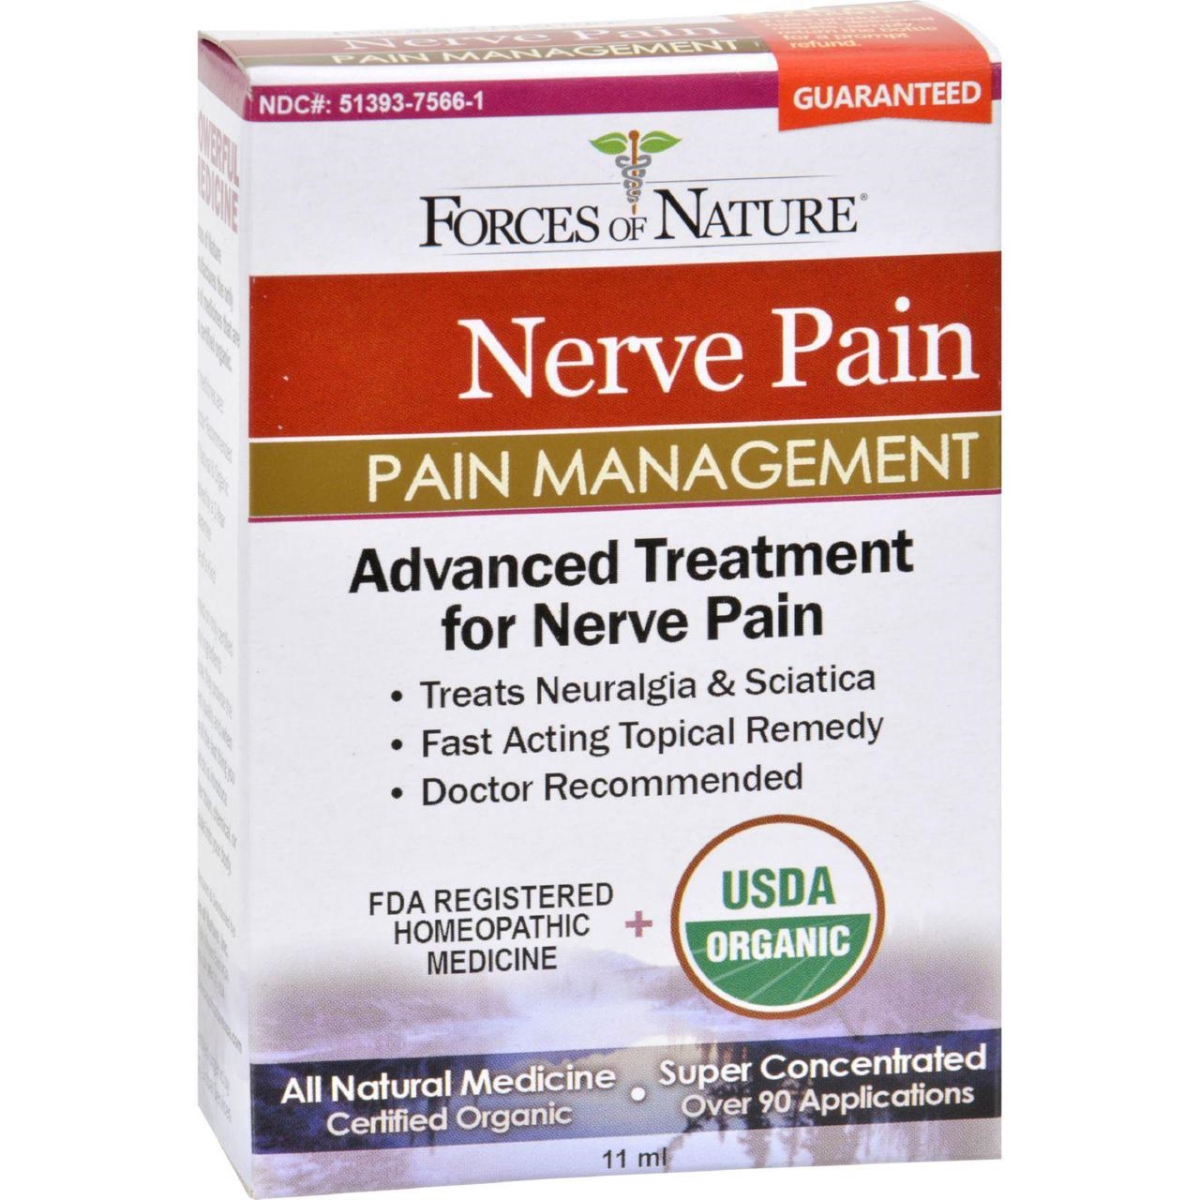 Hg1138247 11 Ml Organic Nerve Pain Management